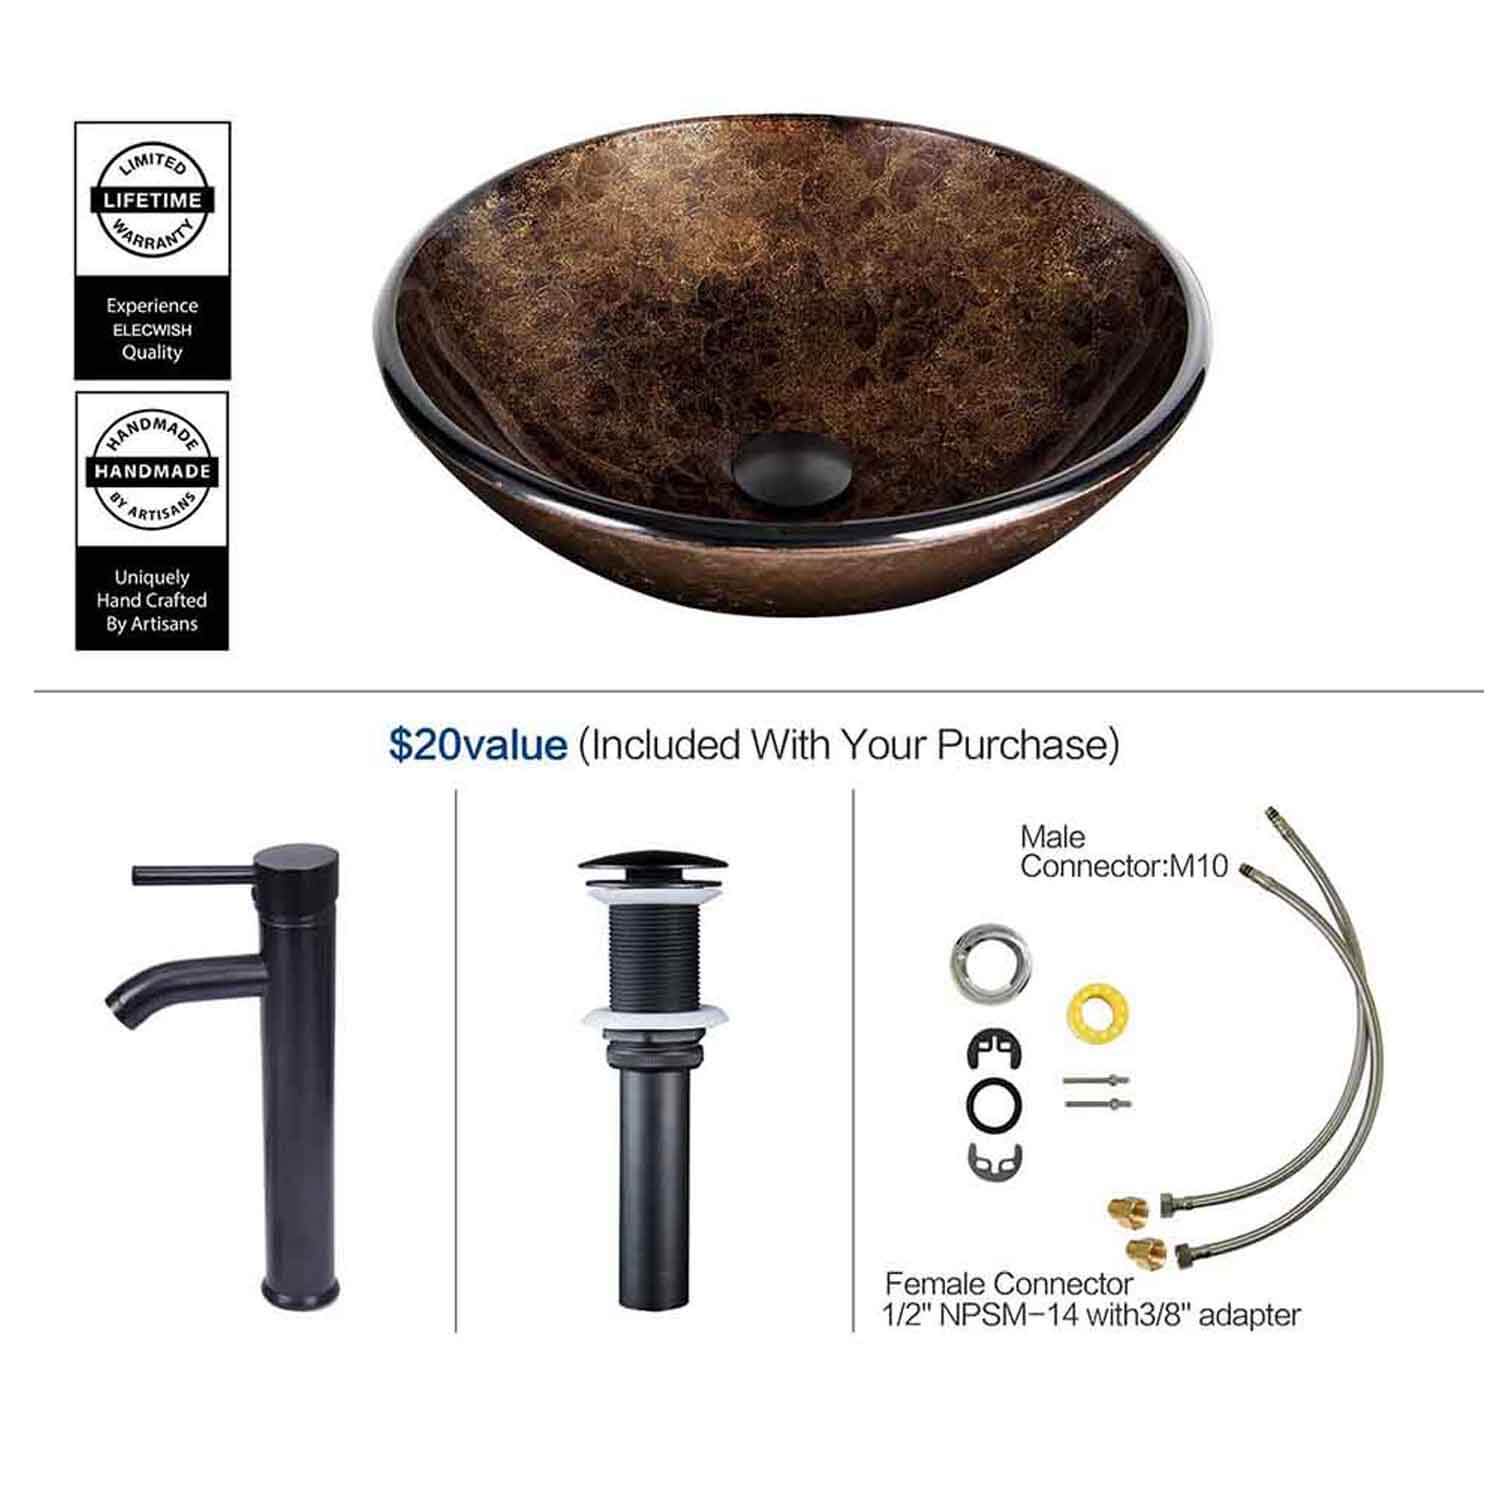 Artistic Round Bathroom Vessel Sink with Faucet (Dark brown) detail image